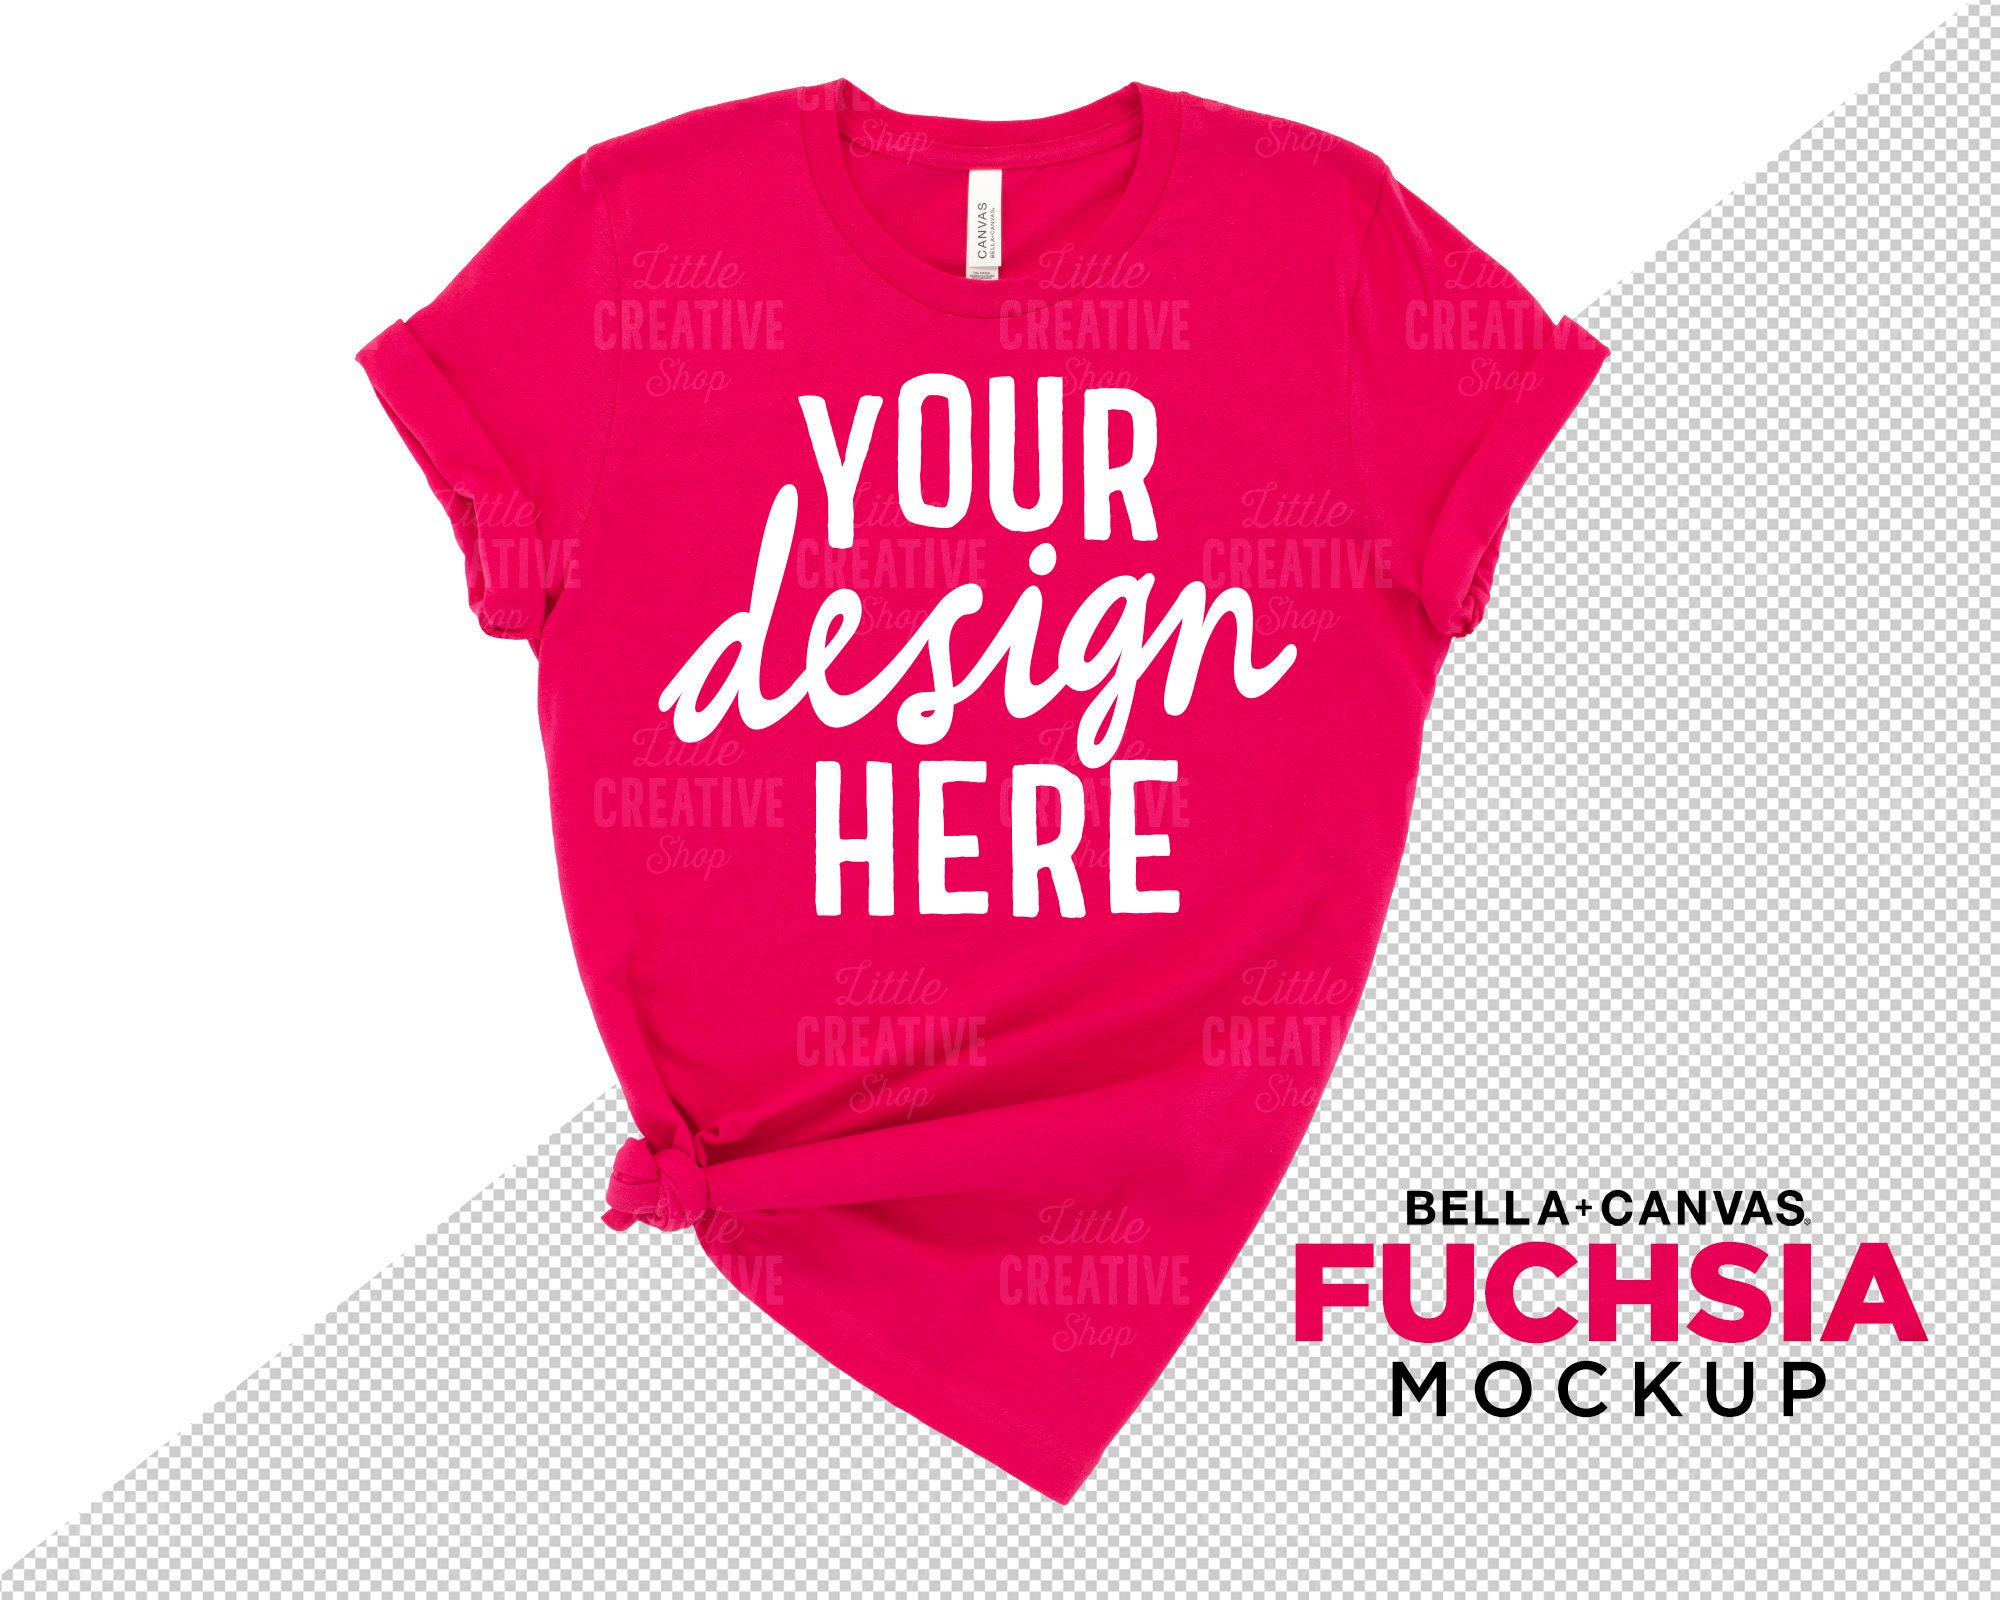 Fuchsia Shirt Mockup 